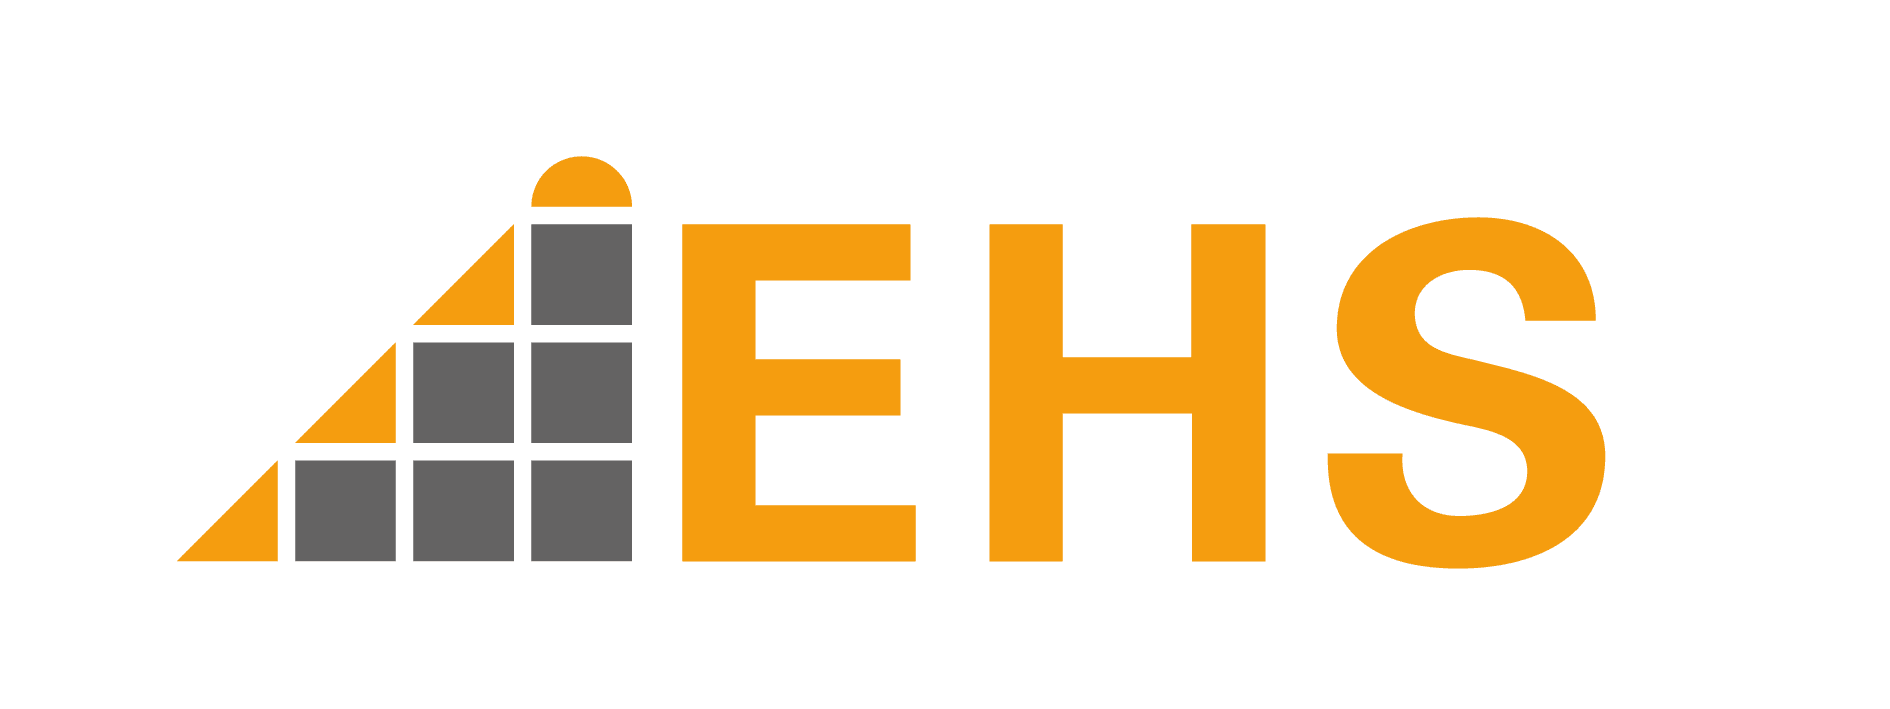 ehs_logo